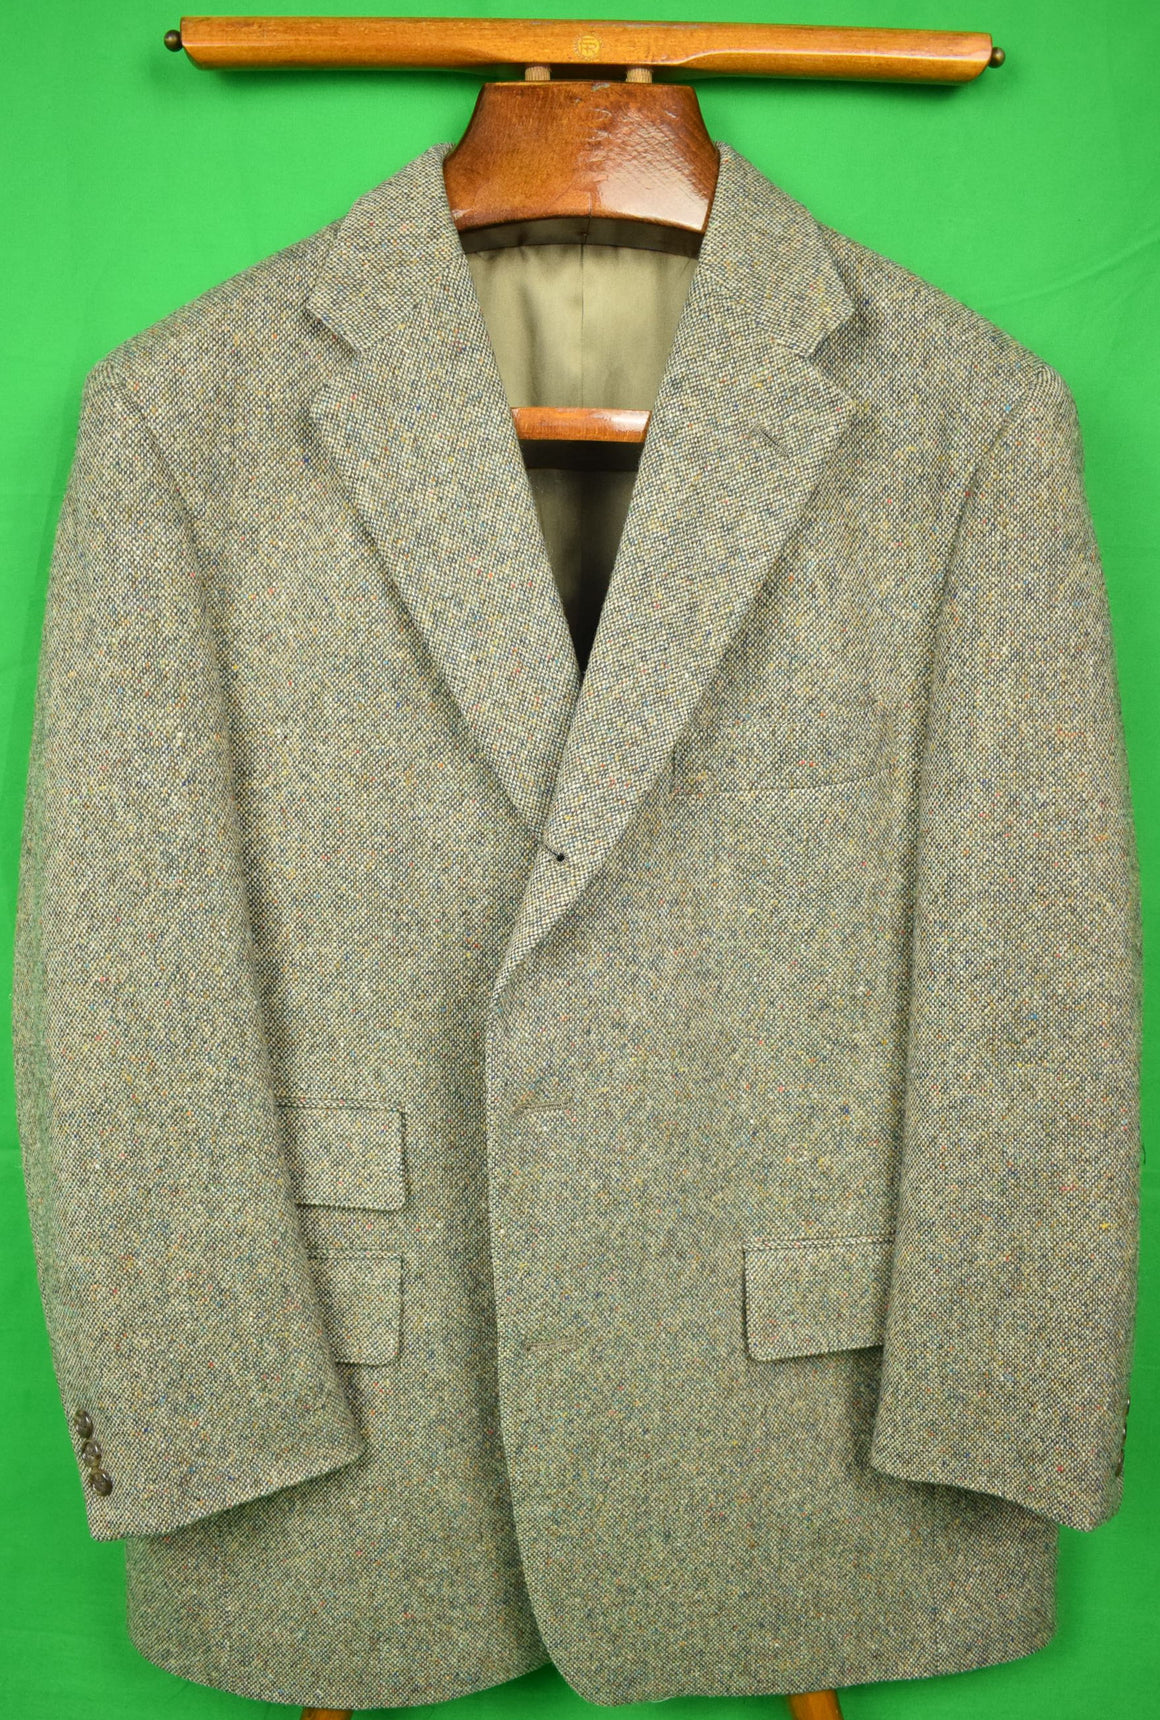 "J. Press Donegal Tweed 3Pc Wool Suit Sz: 44R 3 Button/ w/ Lapel Vest & Pleated Trouser" Sz: 39"W (SOLD)